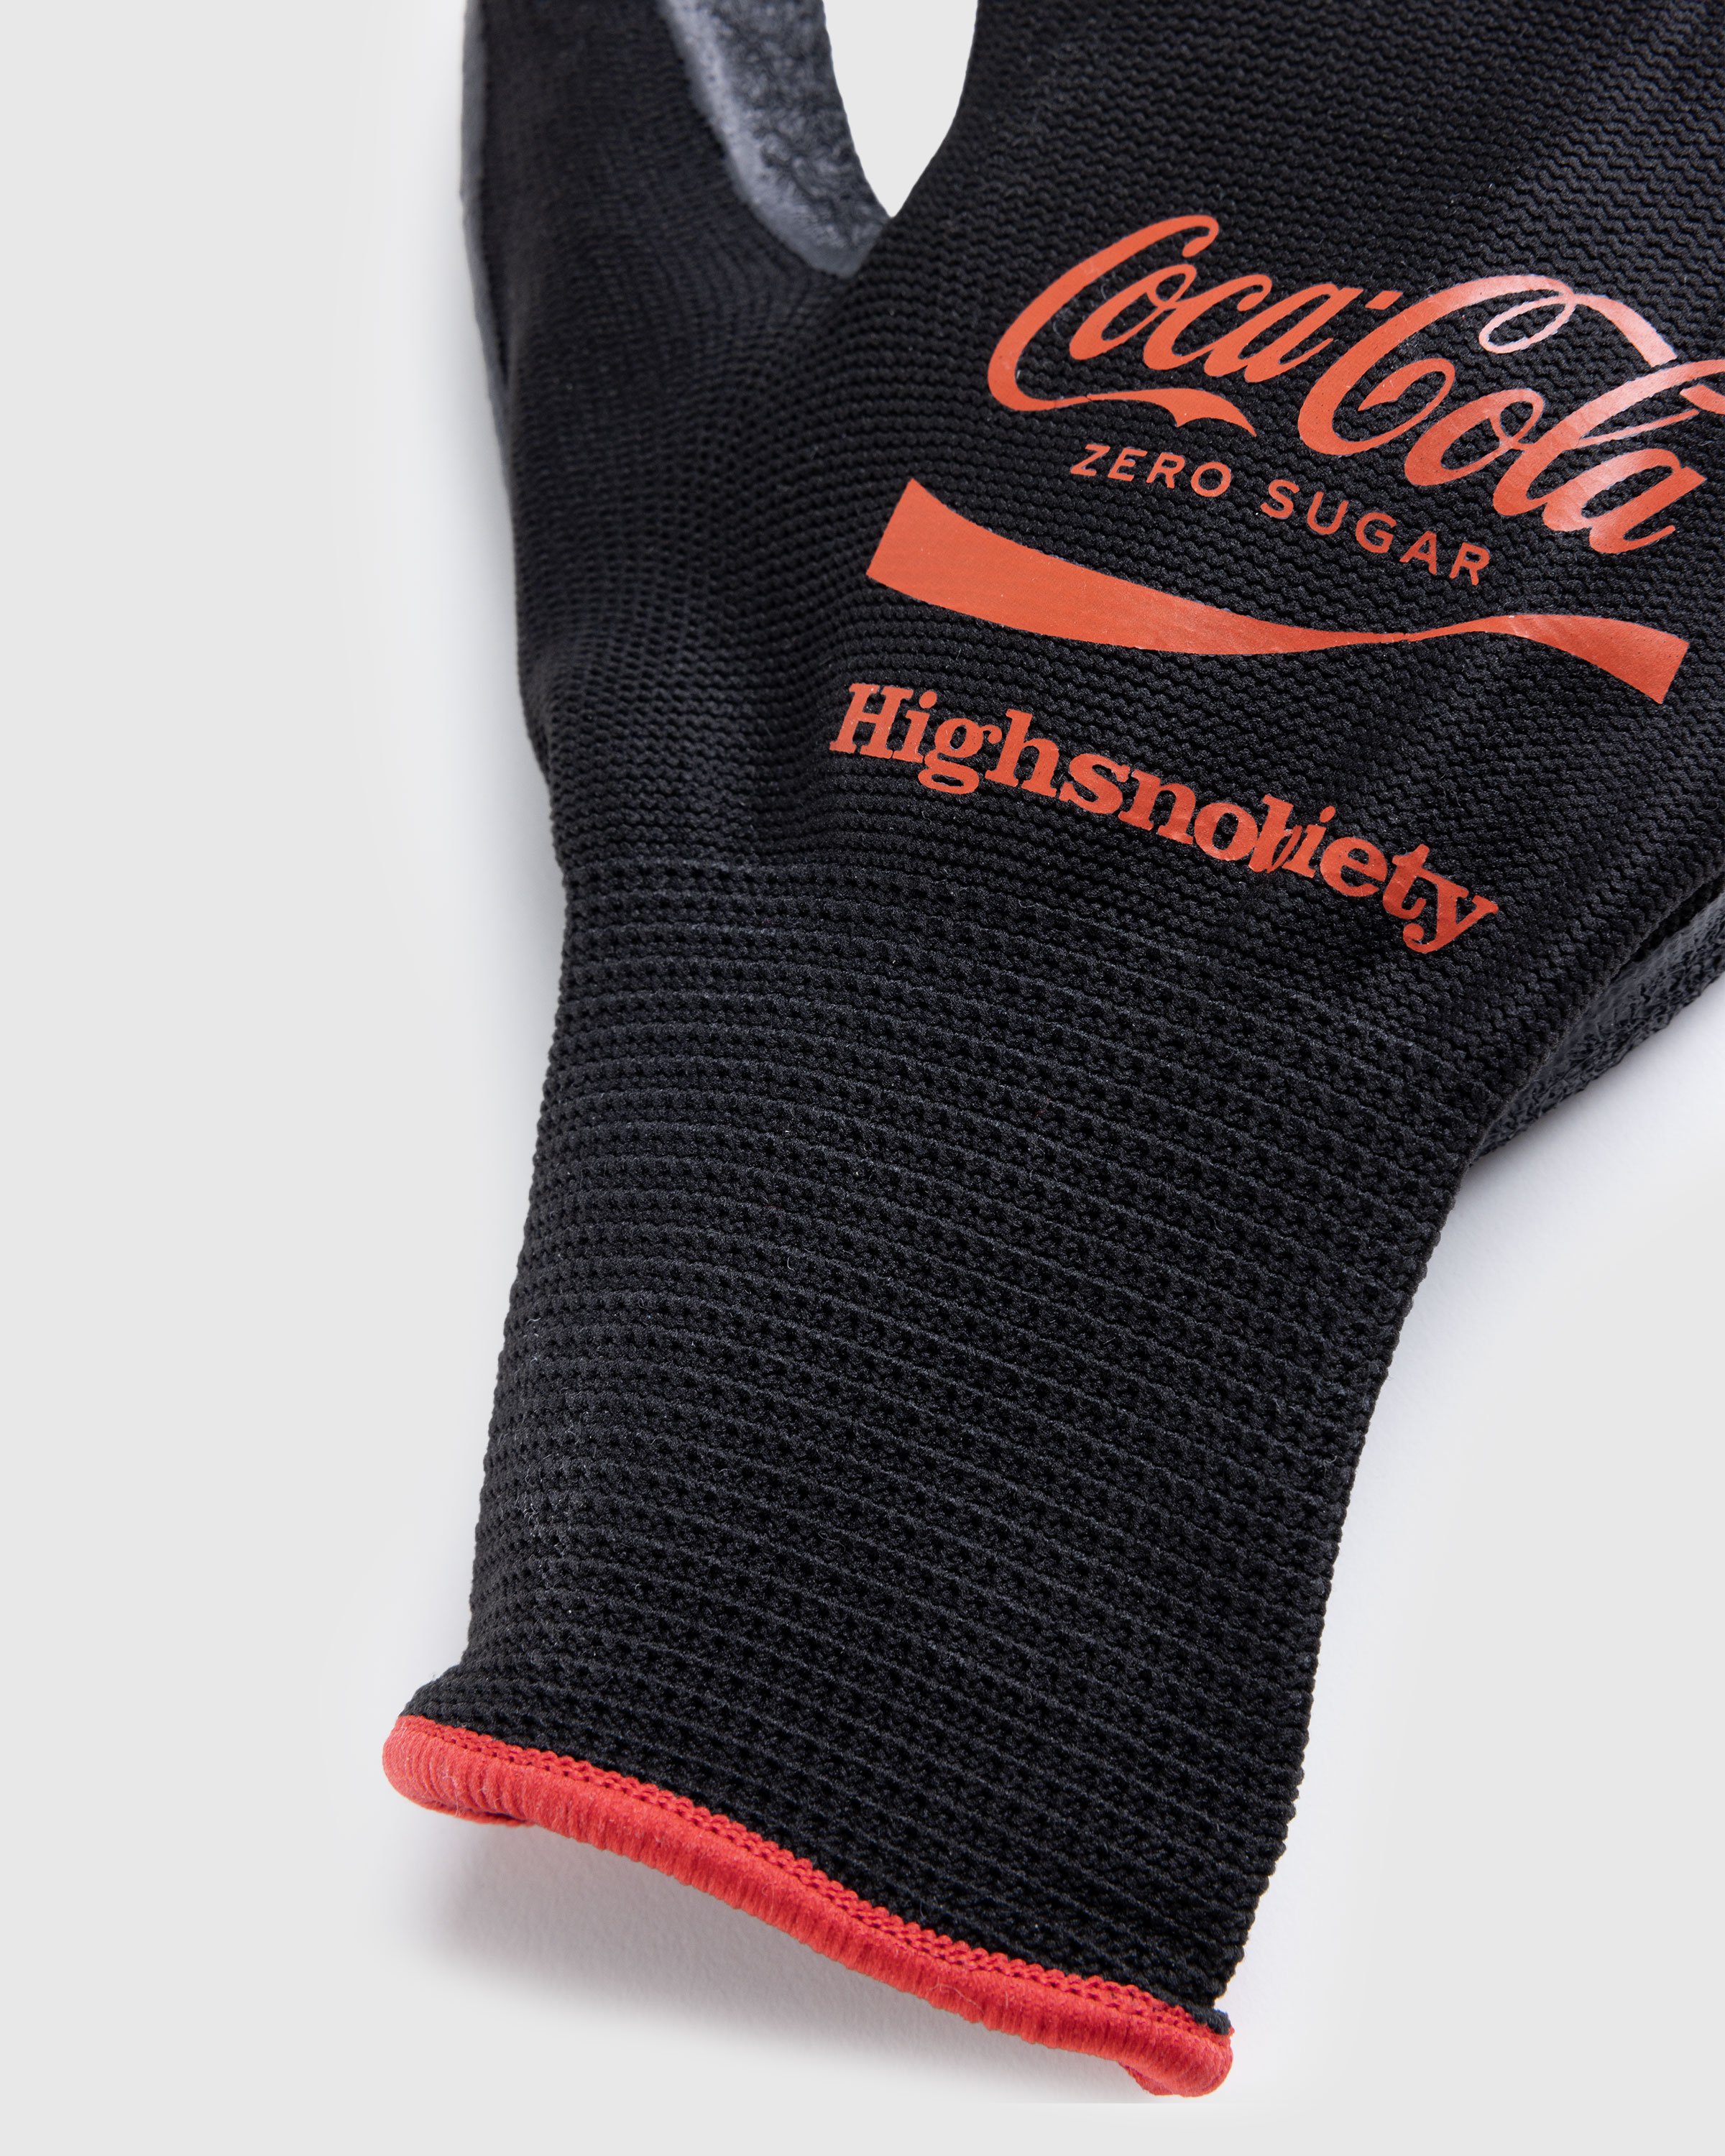 Highsnobiety x Coca-Cola Zero Sugar - Gloves Black - Accessories - Black - Image 3